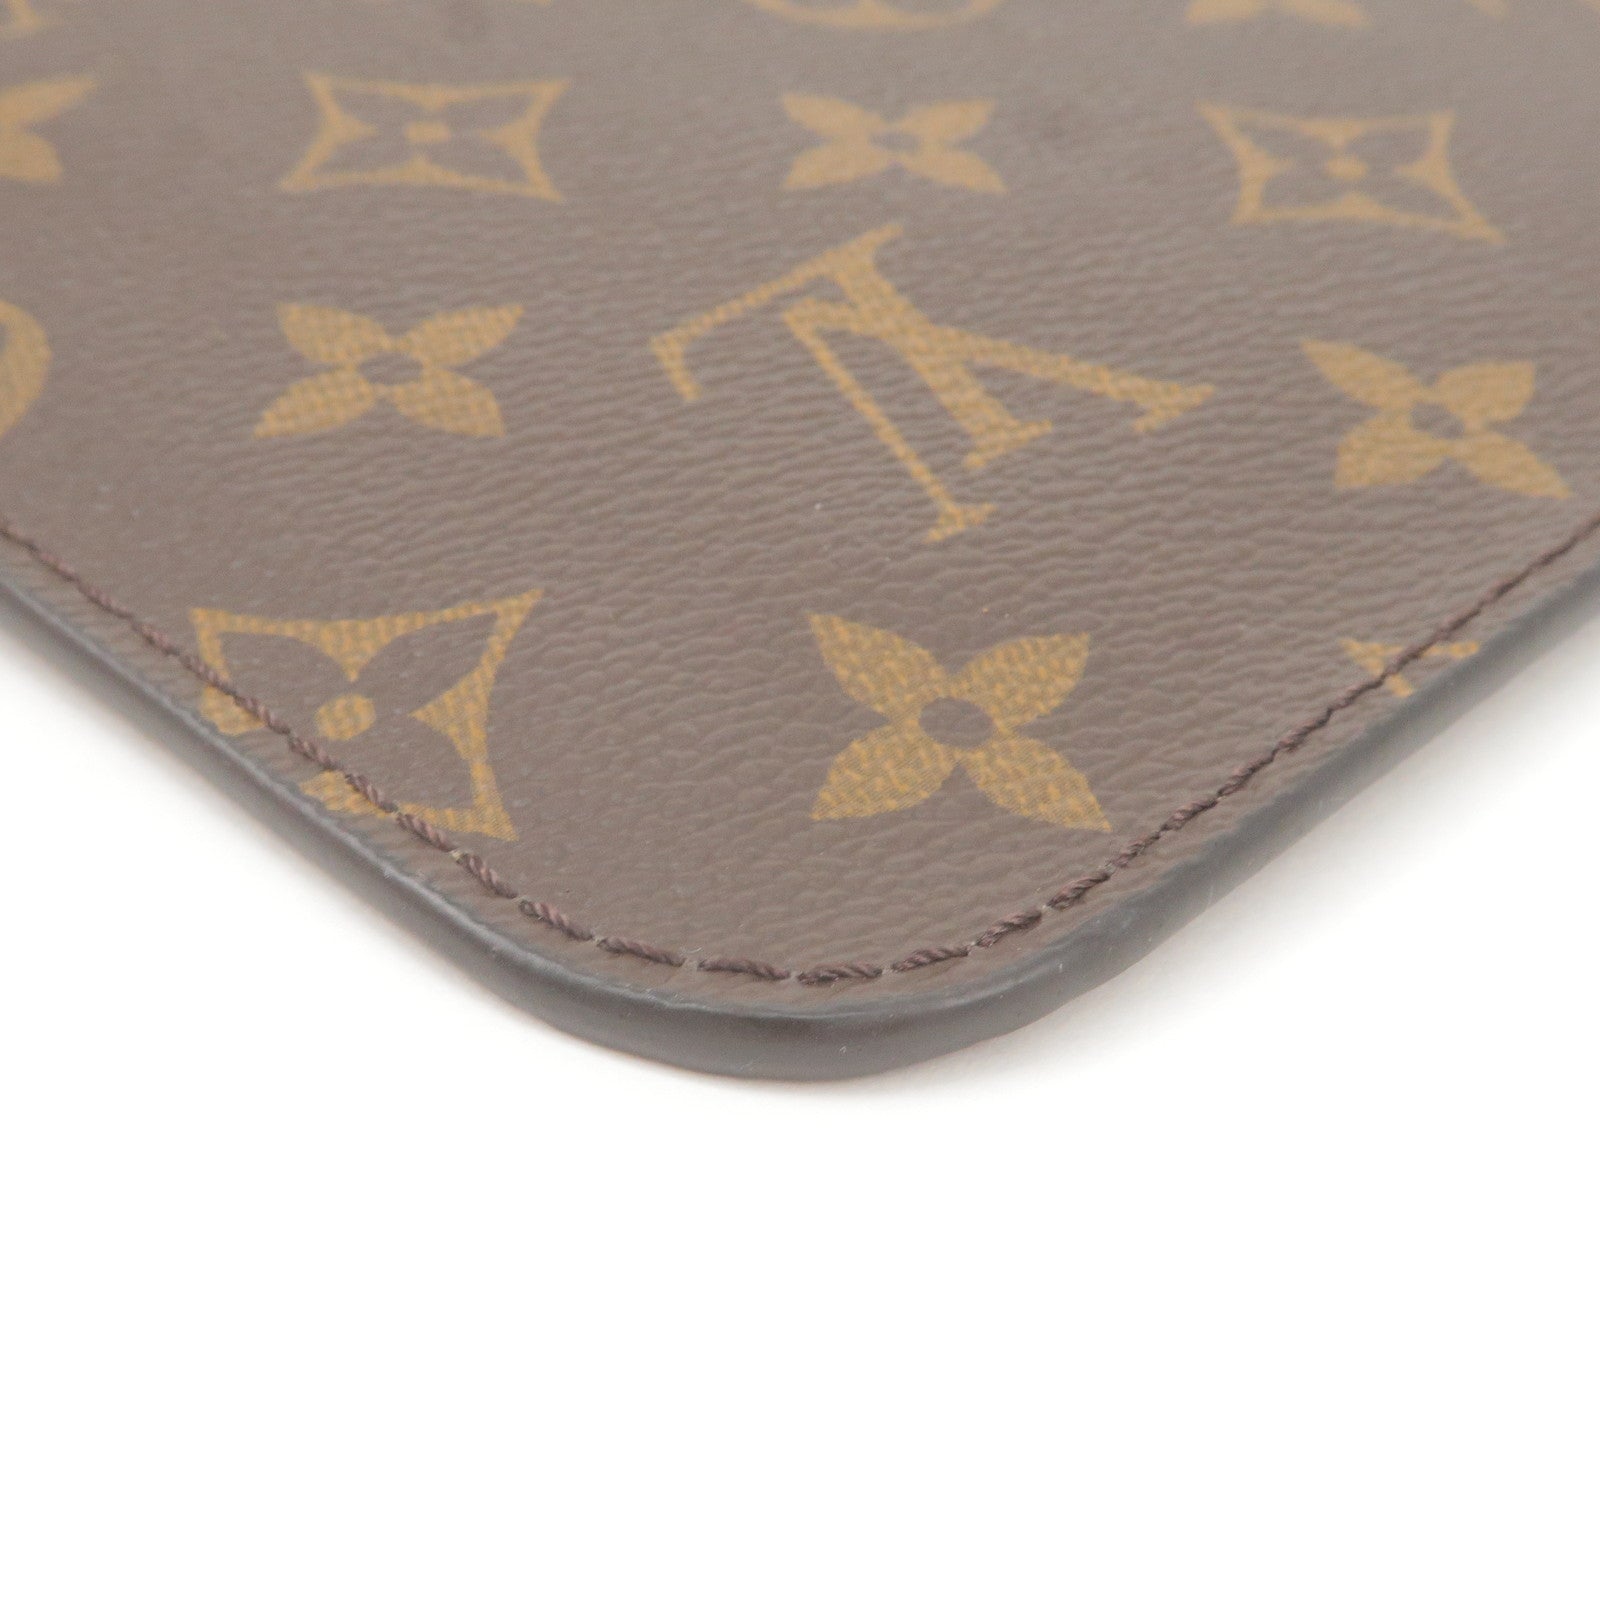 Louis Vuitton Monogram 15 inch Laptop Sleeve 